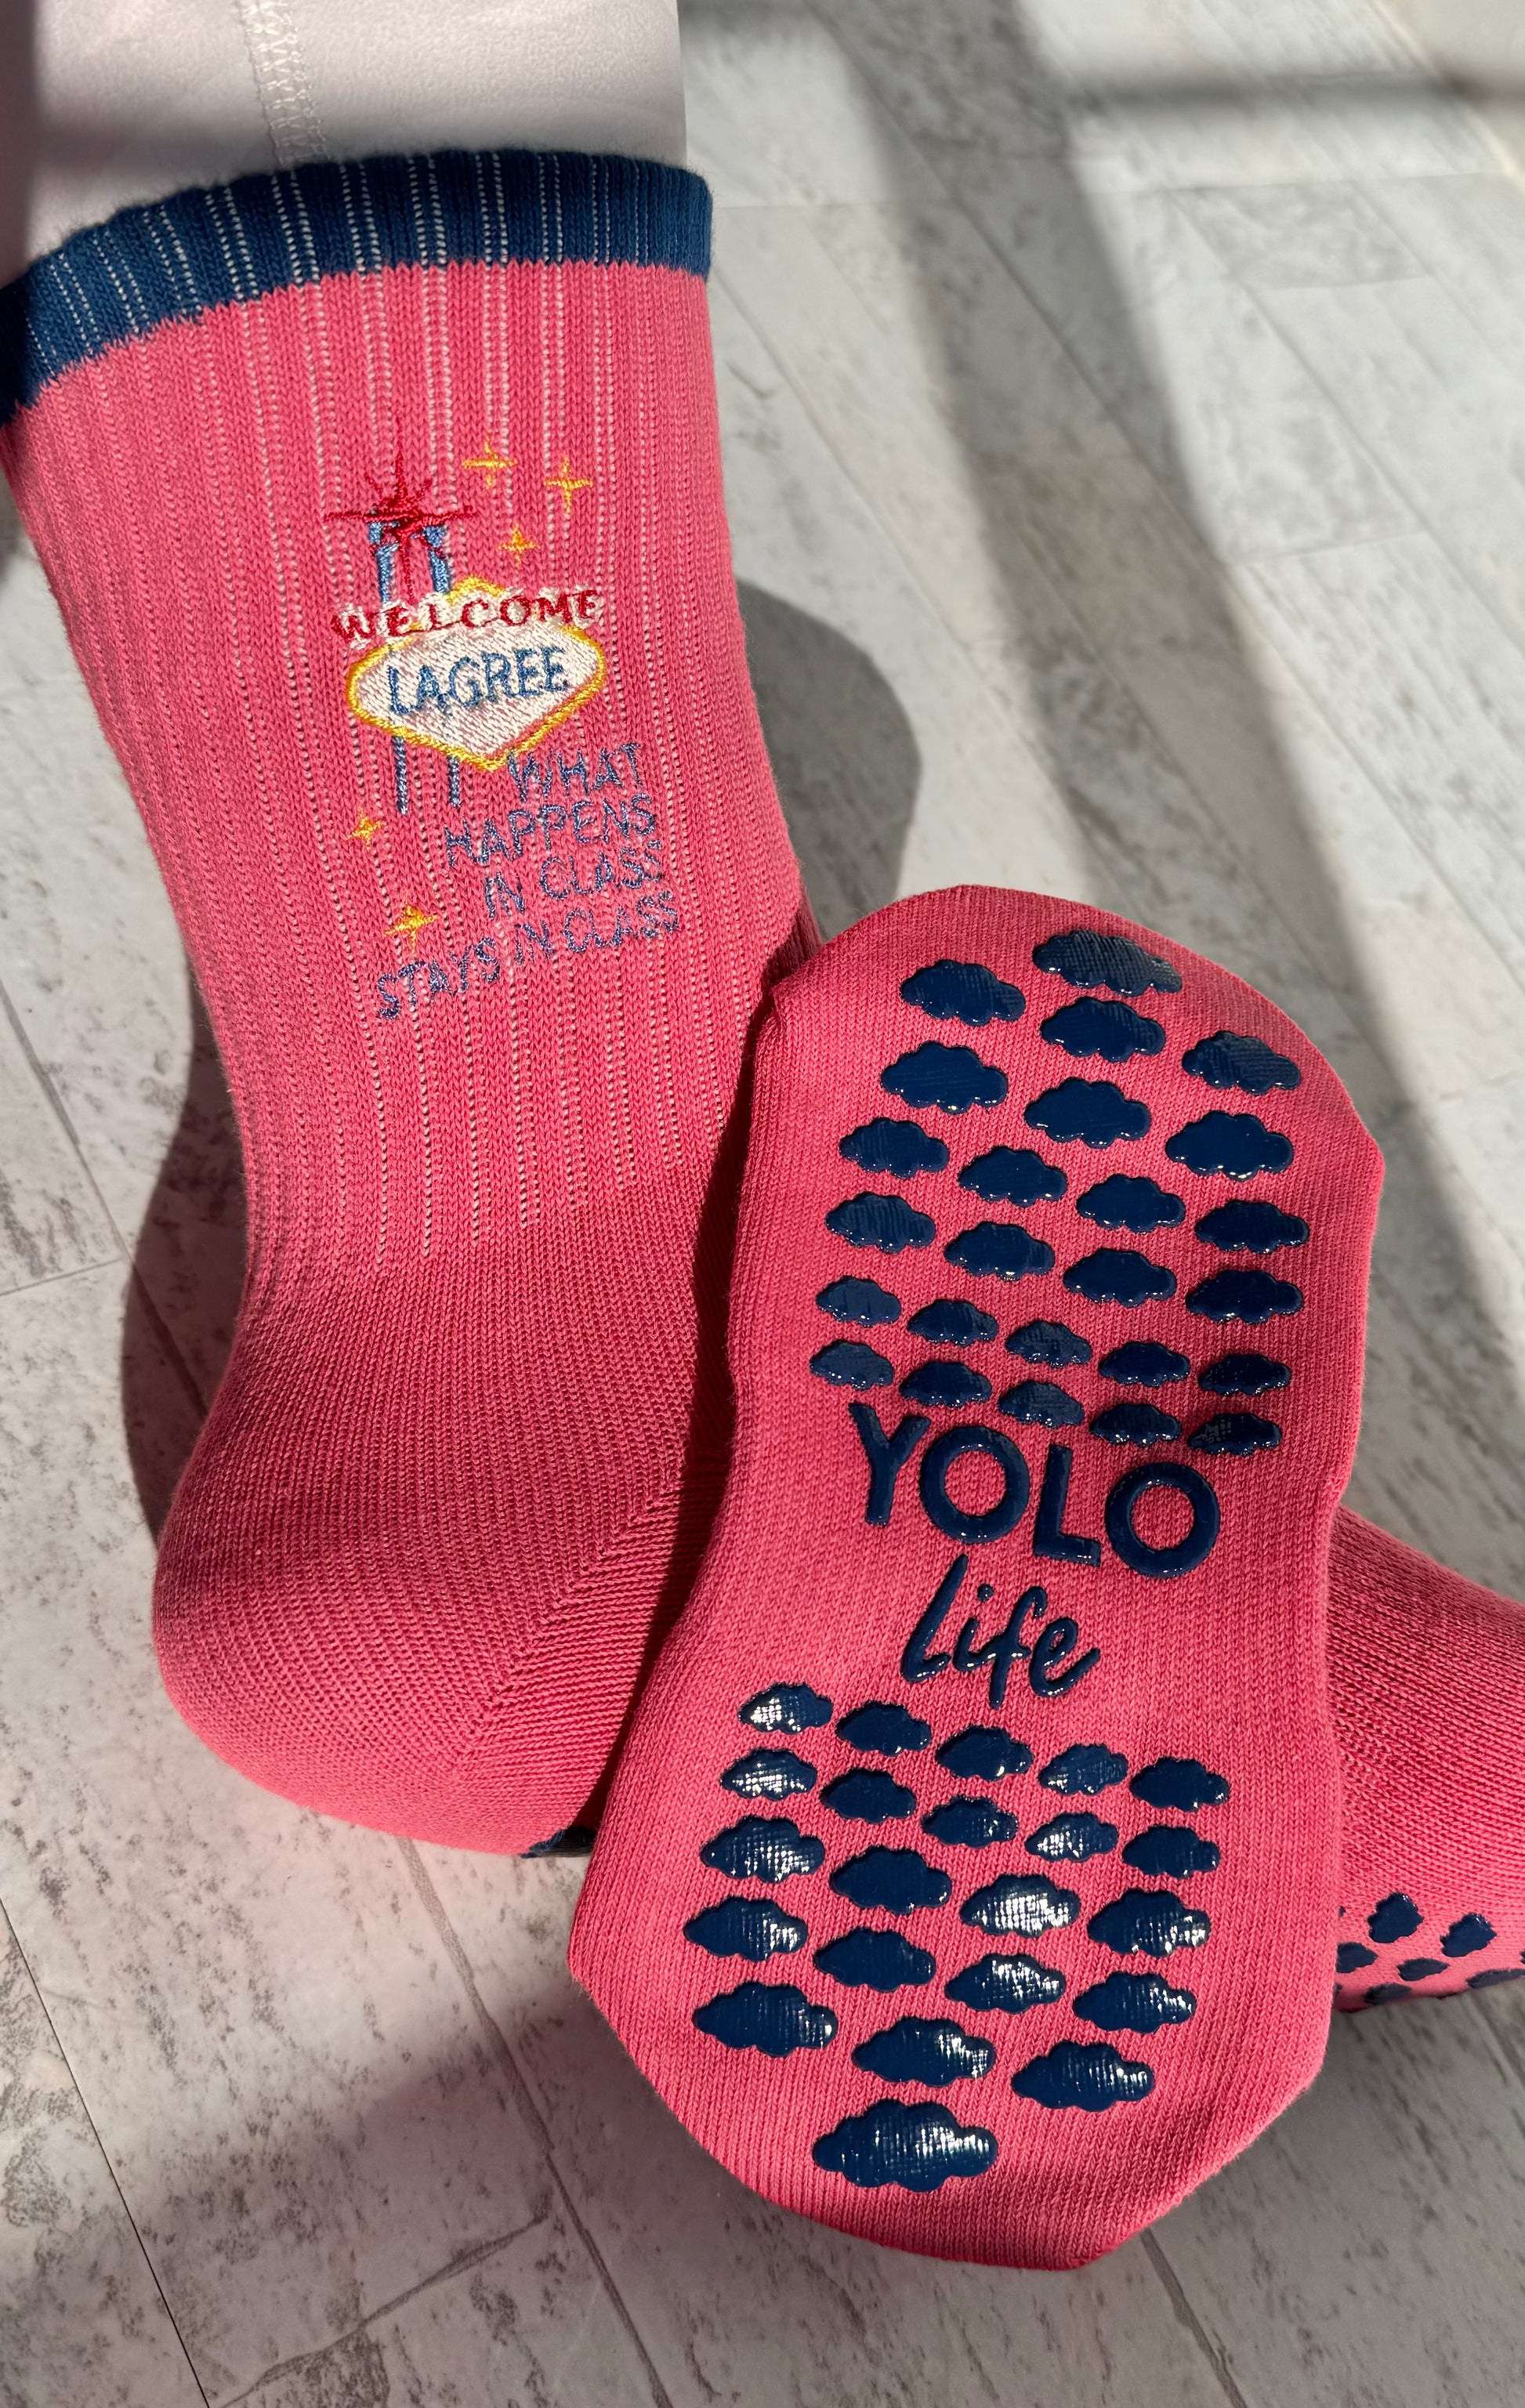 VEGAS BABY” lagree crew grip socks – YOLO LIFE SHOP